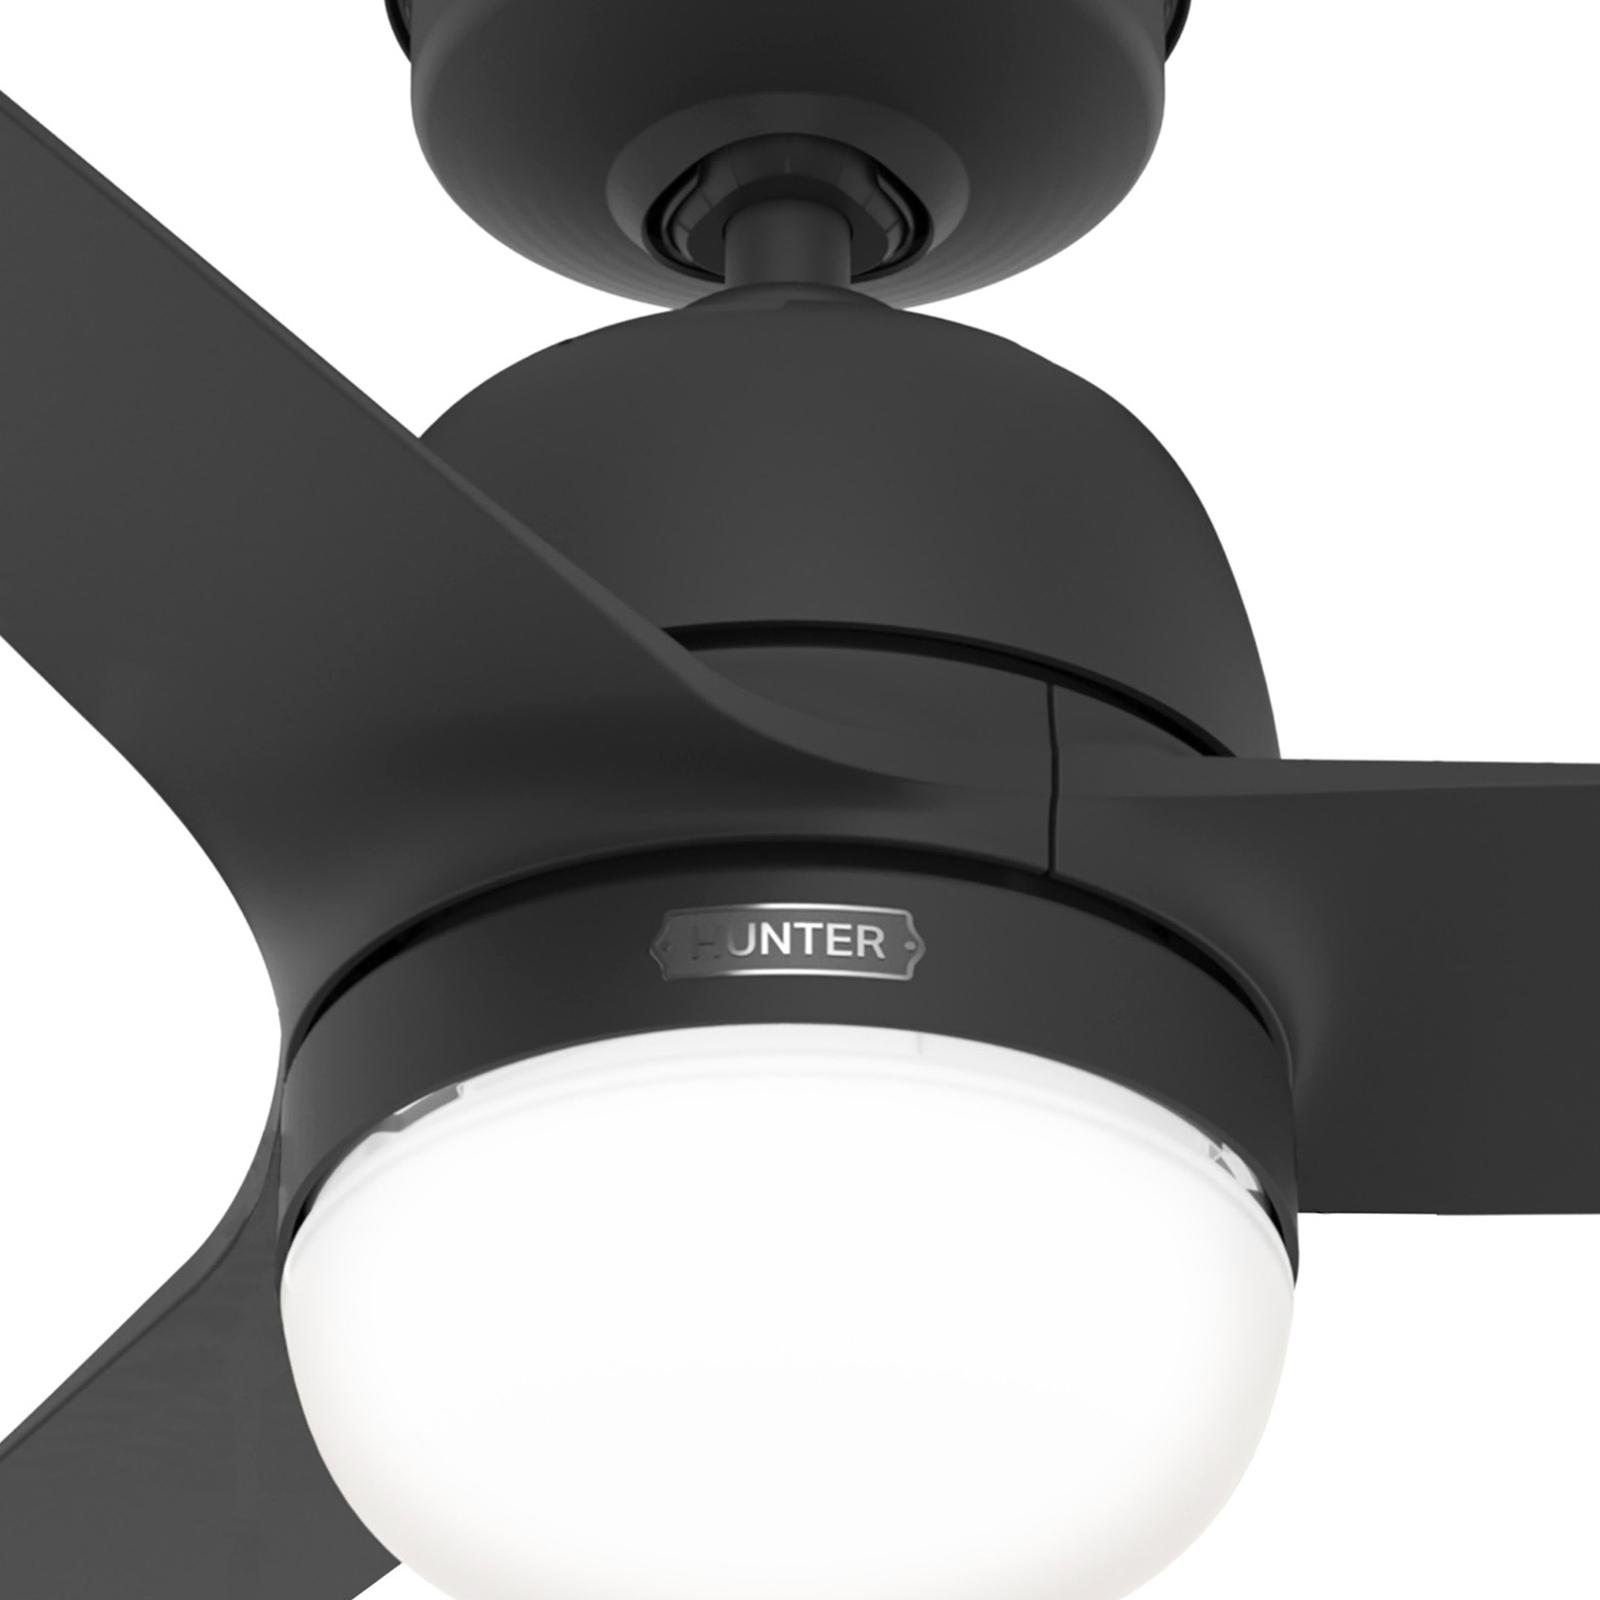 Hunter SeaWave ceiling fan lamp IP44 black